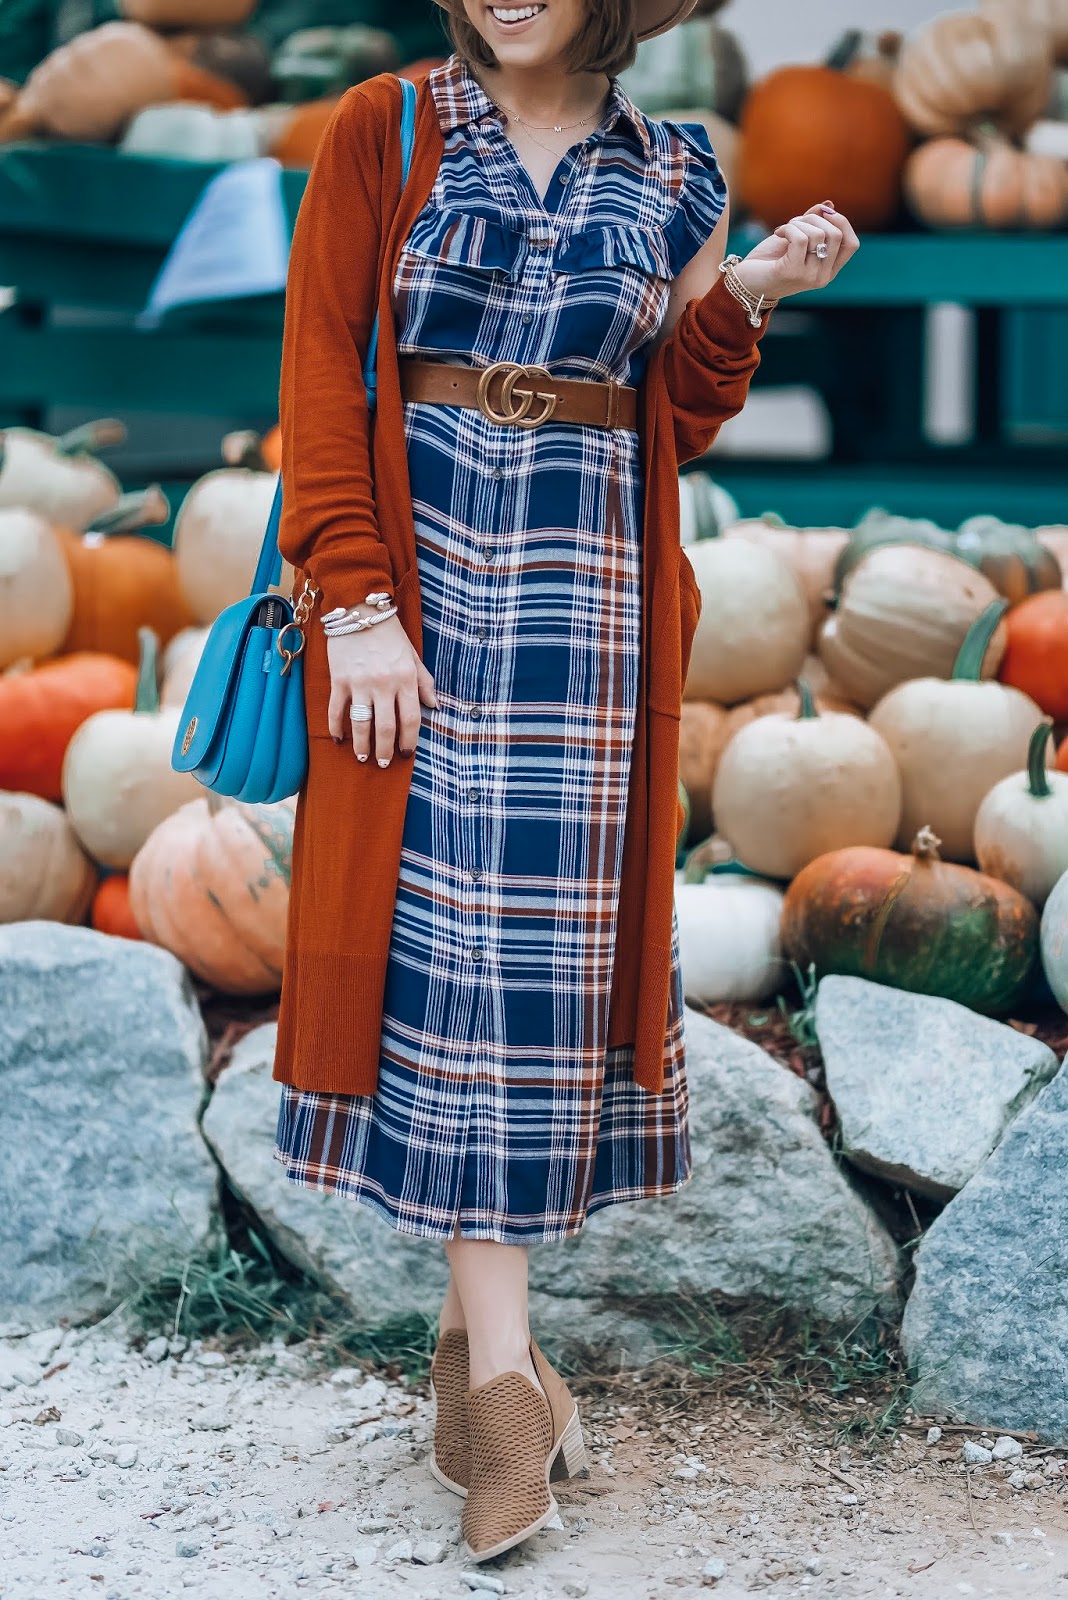 Roadside Pumpkin Stand in Highlands + Under $30 Plaid Flannel Midi Dress - Something Delightful Blog #targetstyle #fallstyle #affordablefashion